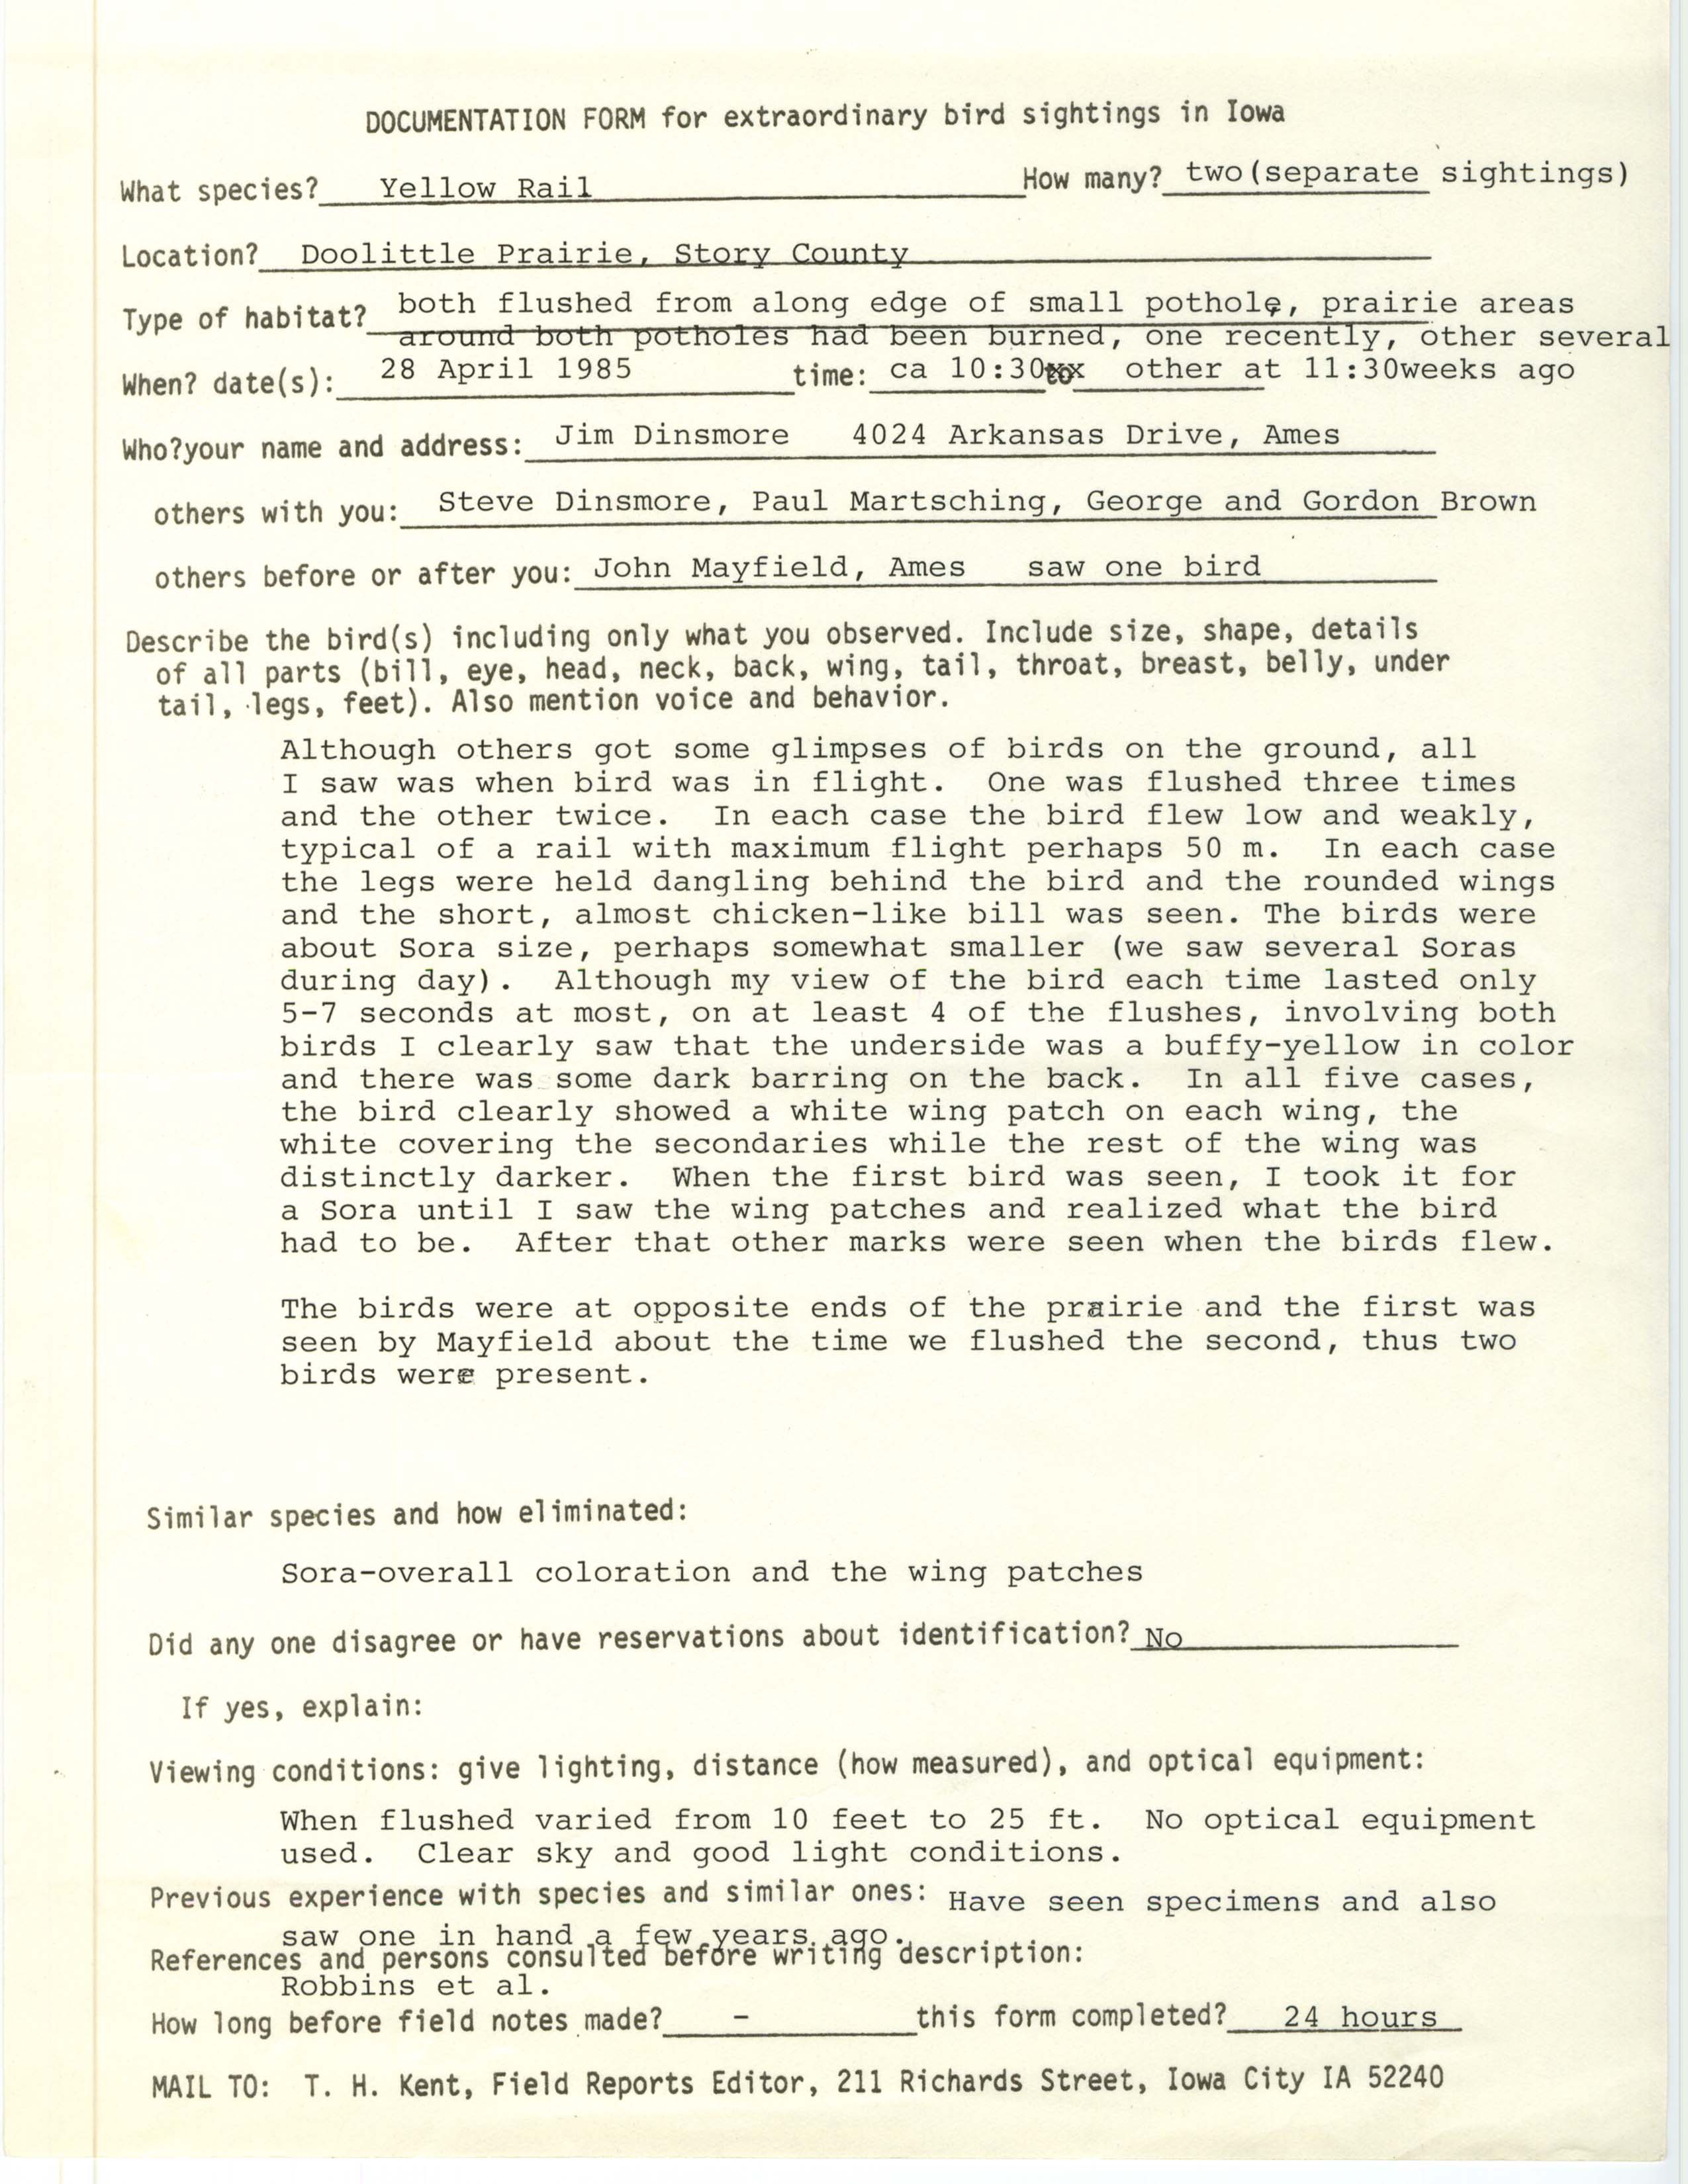 Rare bird documentation form for Yellow Rail at Doolittle Prairie, 1985